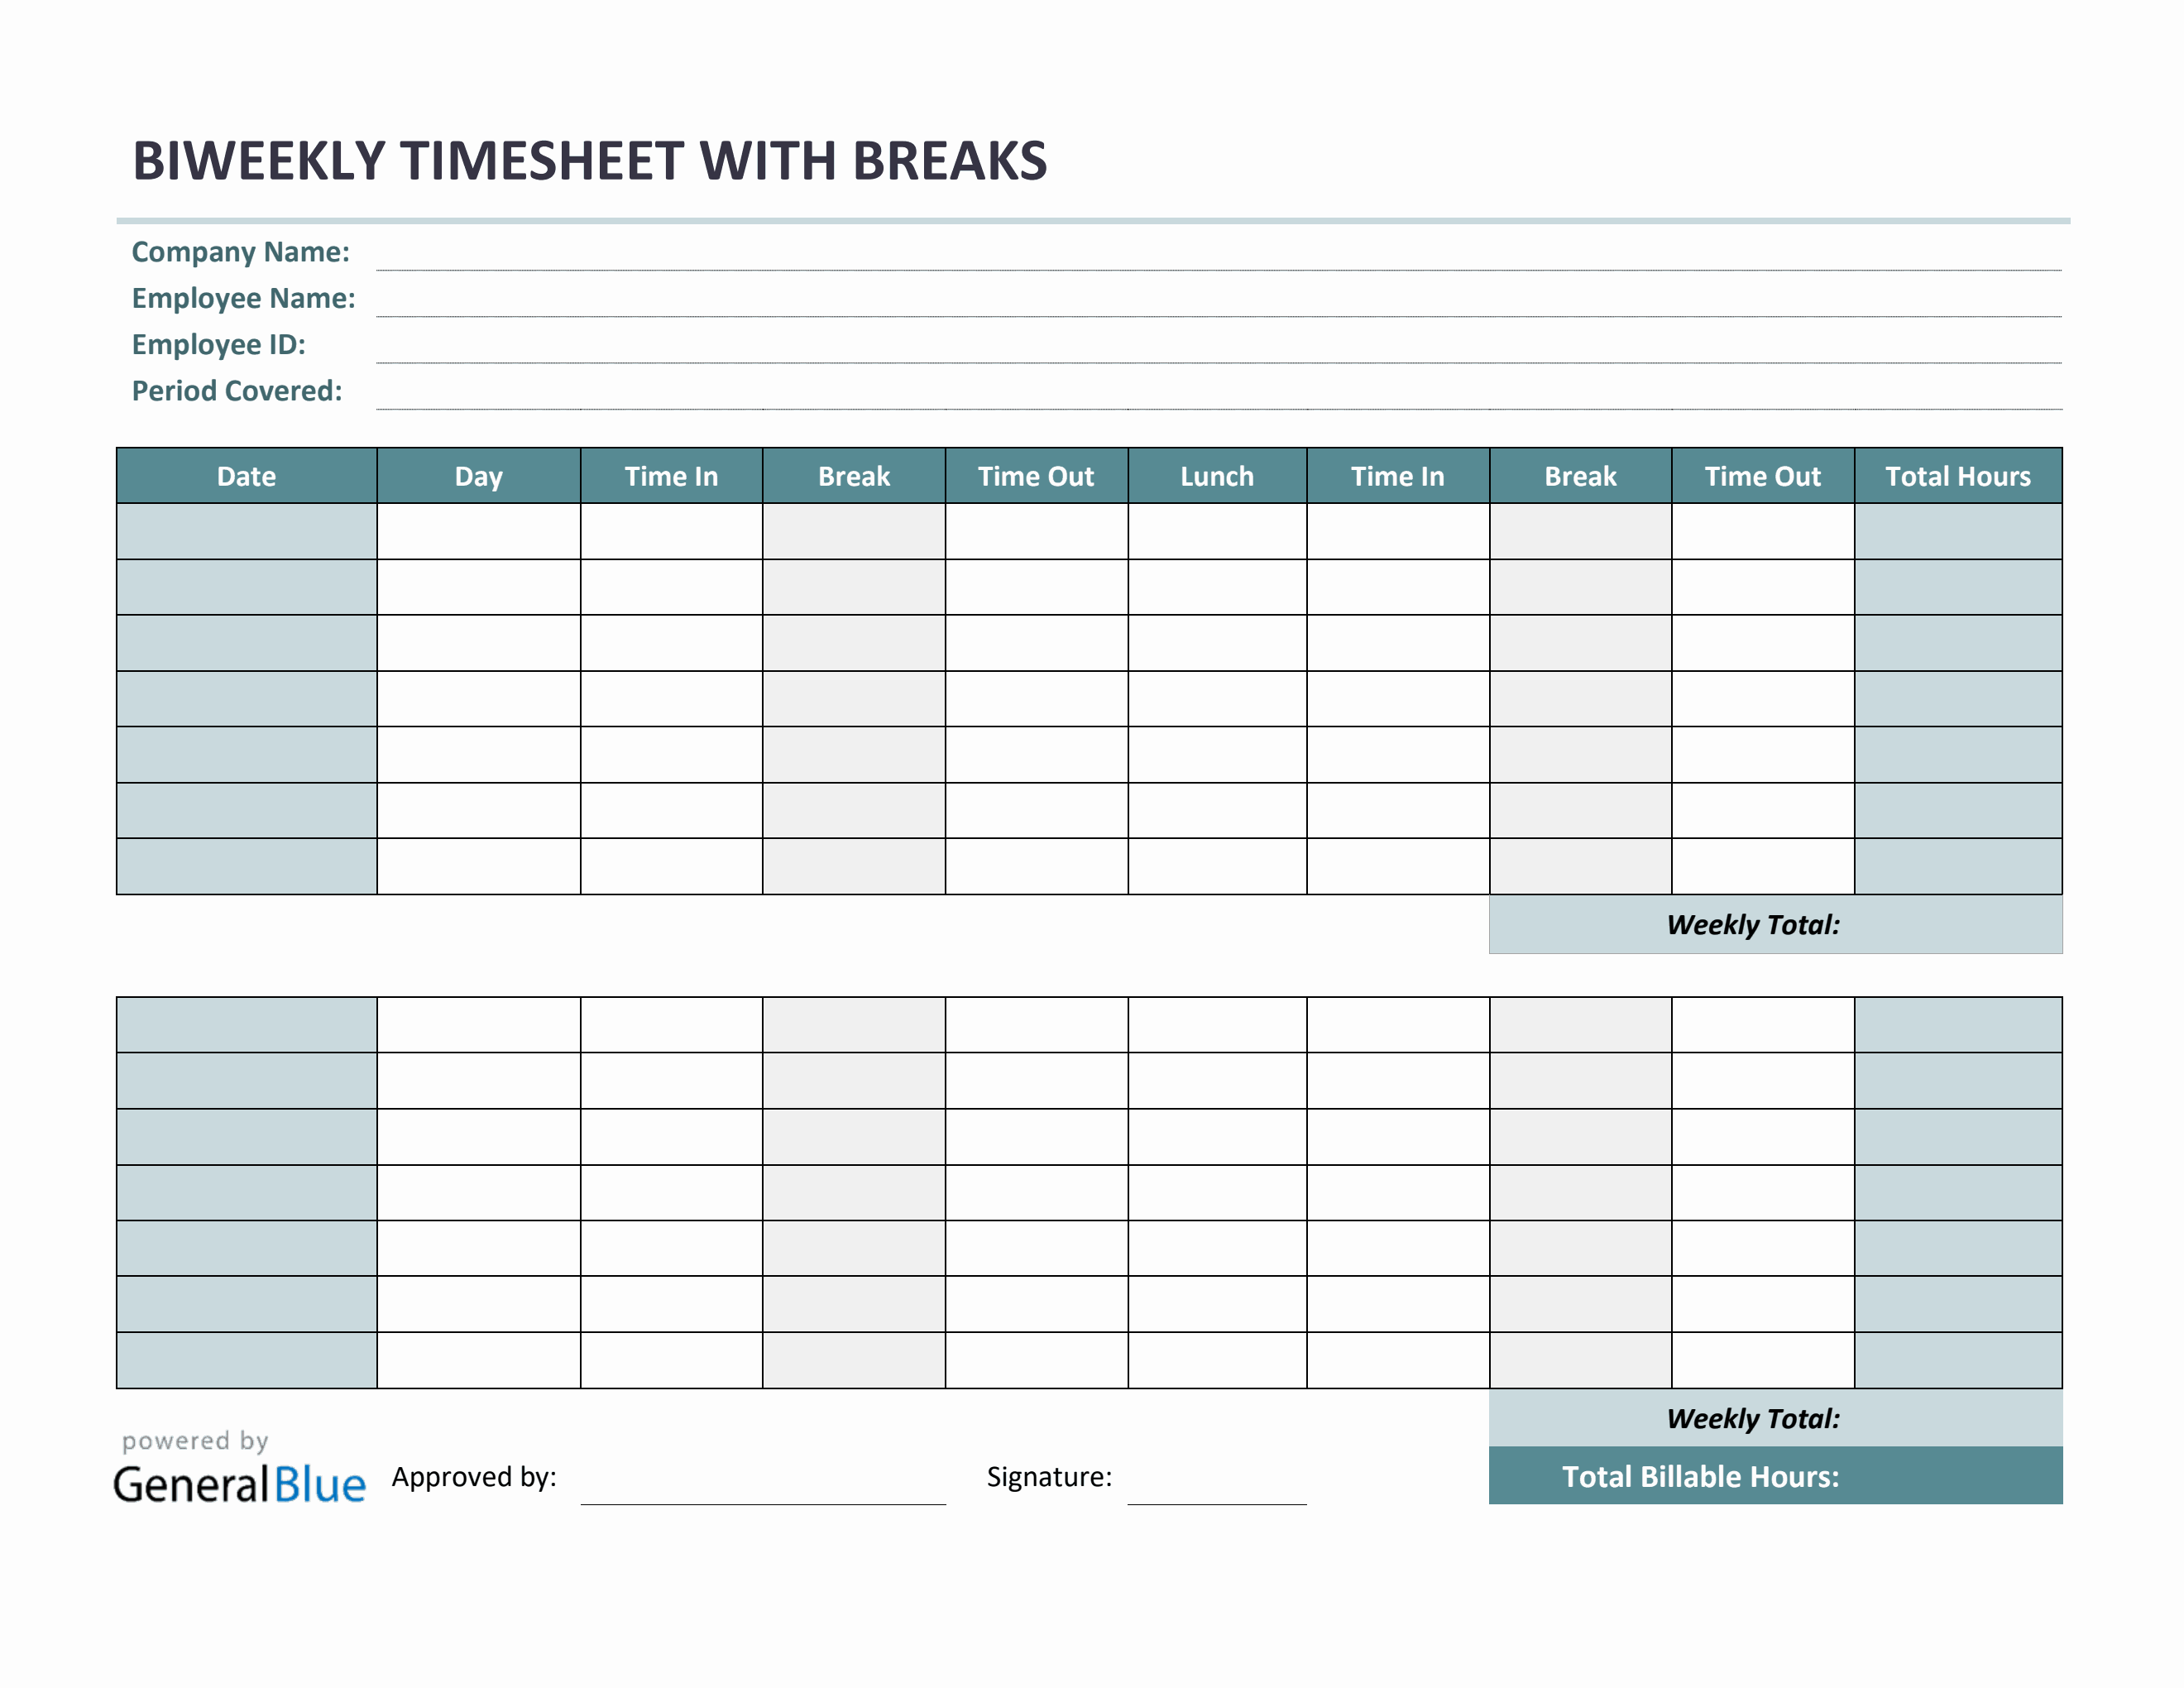 biweekly-timesheet-with-multiple-breaks-in-pdf